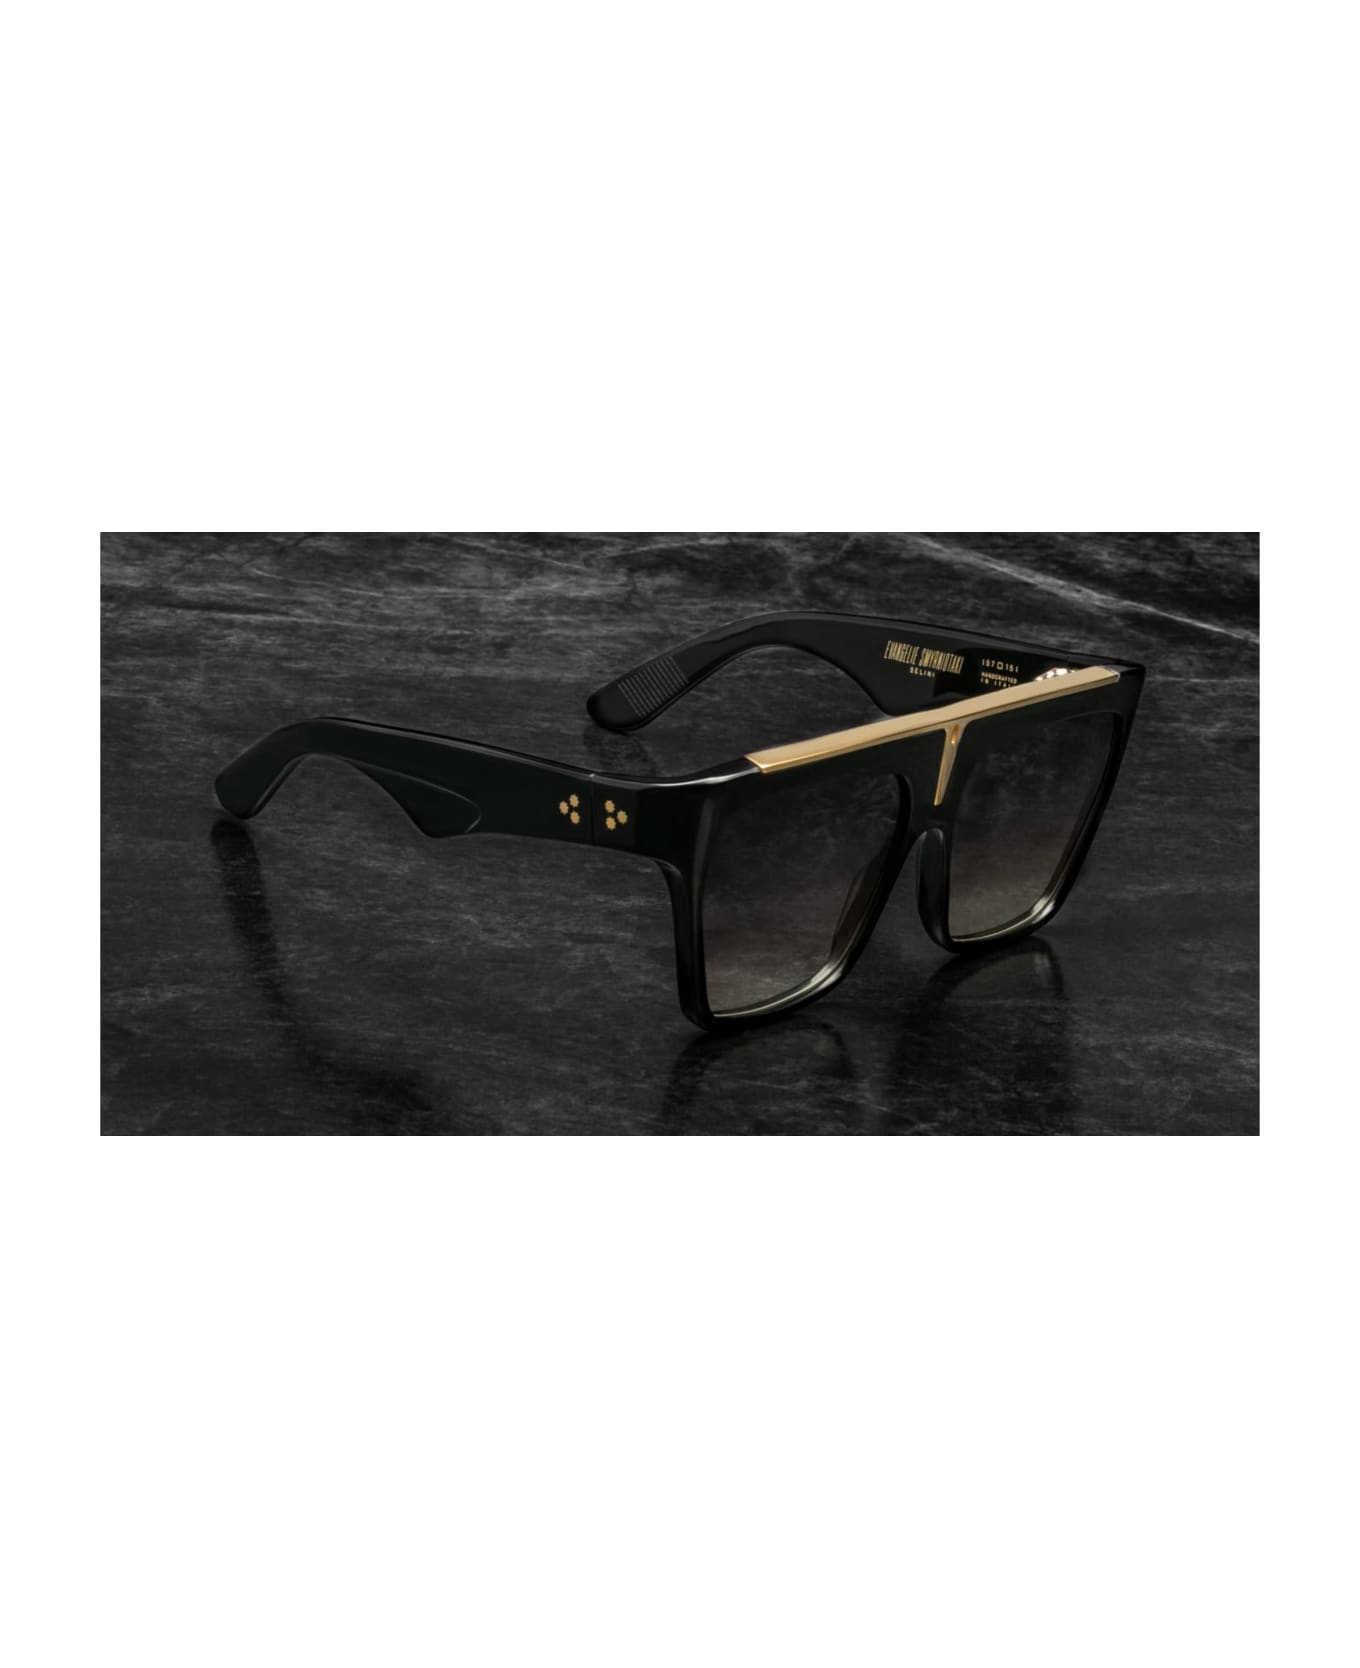 Jacques Marie Mage Selini - Black Sunglasses - Black/gold サングラス